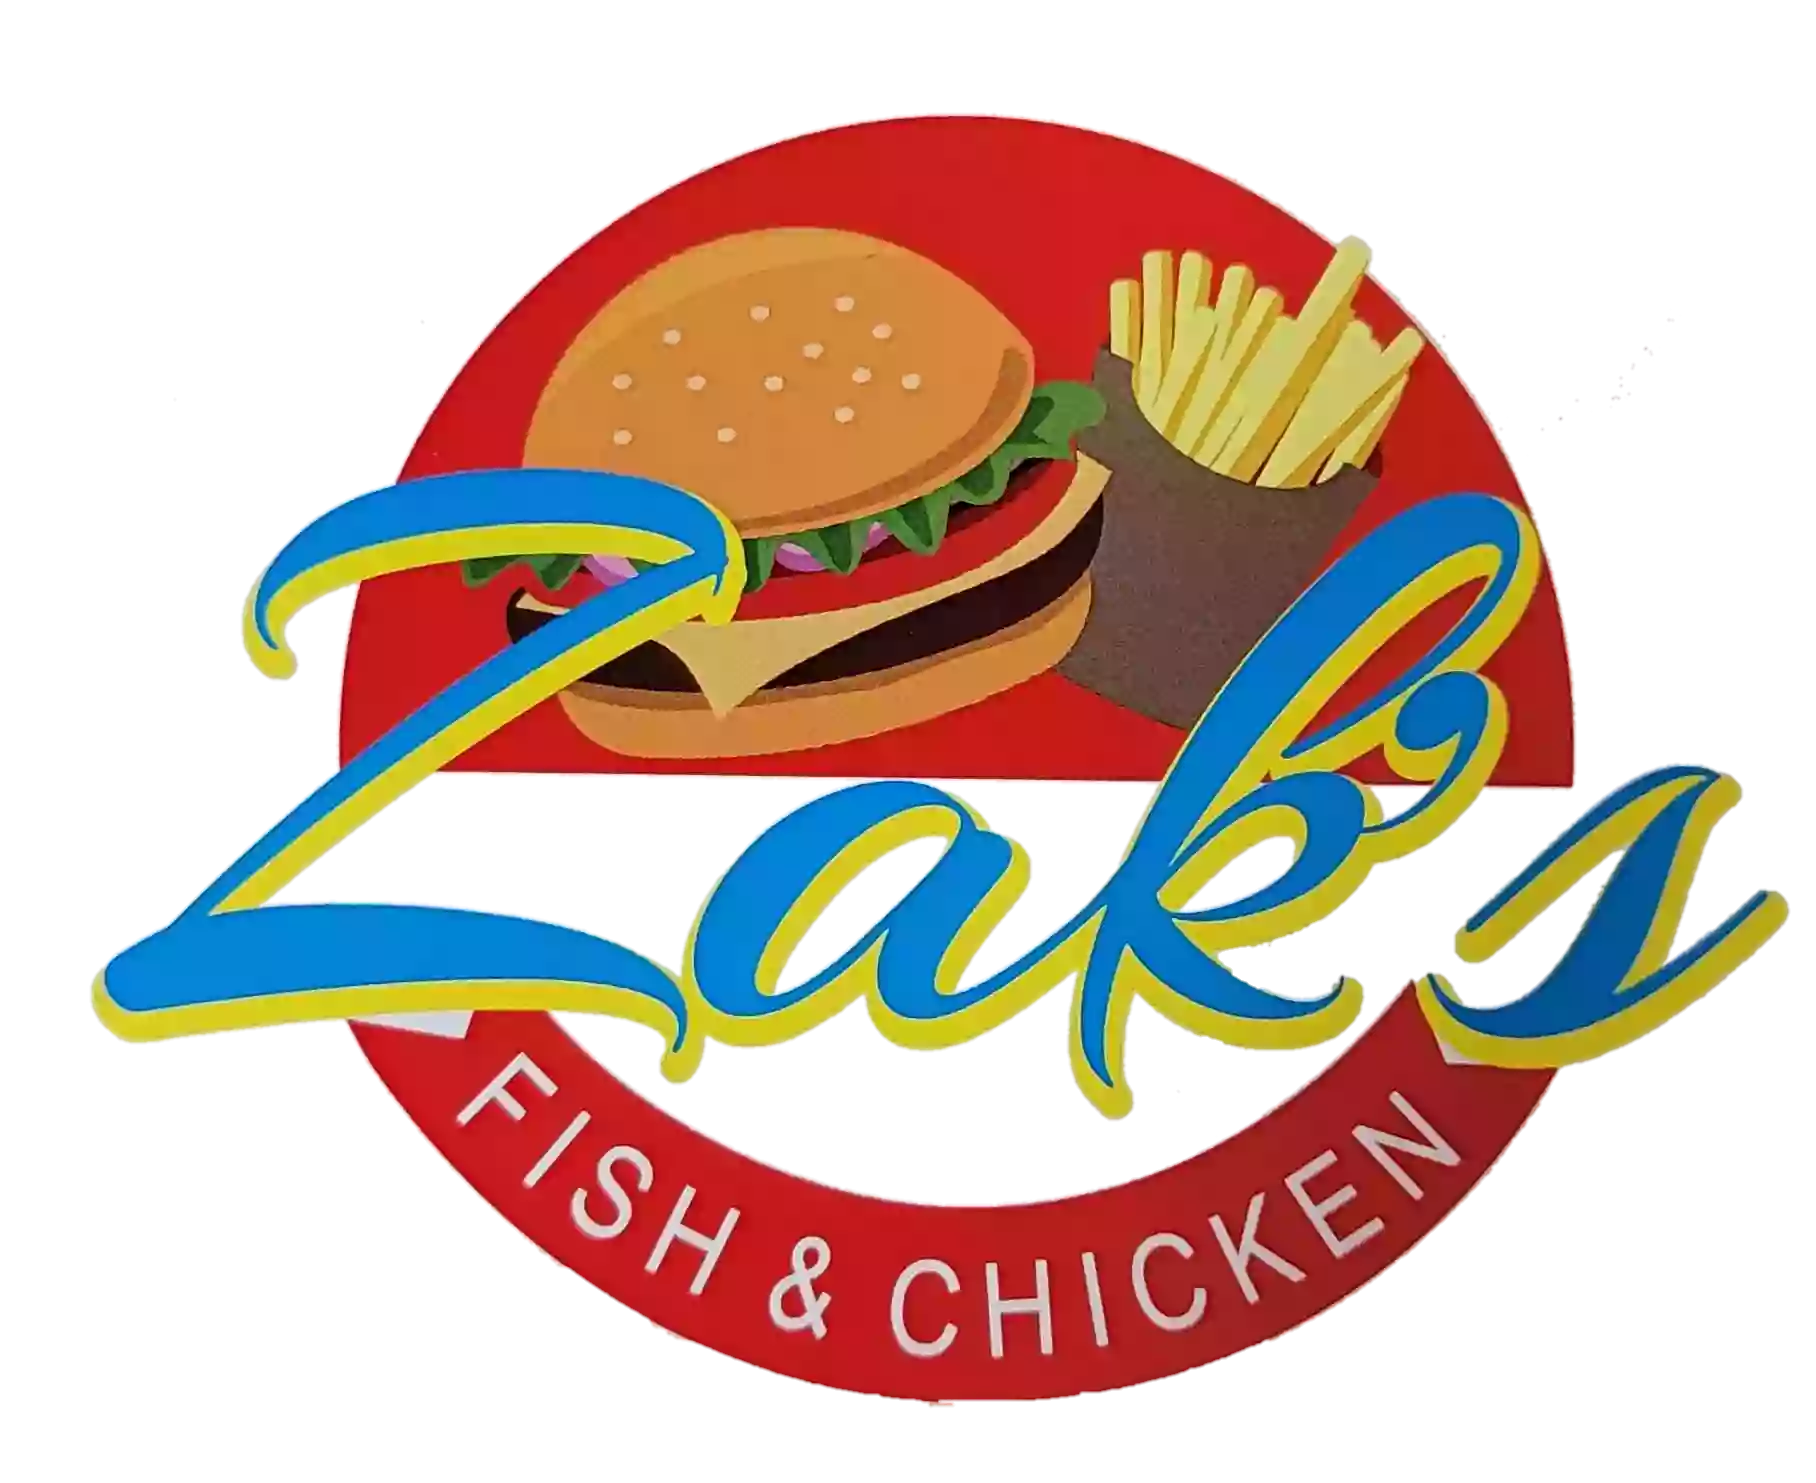 Zak’s Fish & Chicken 2